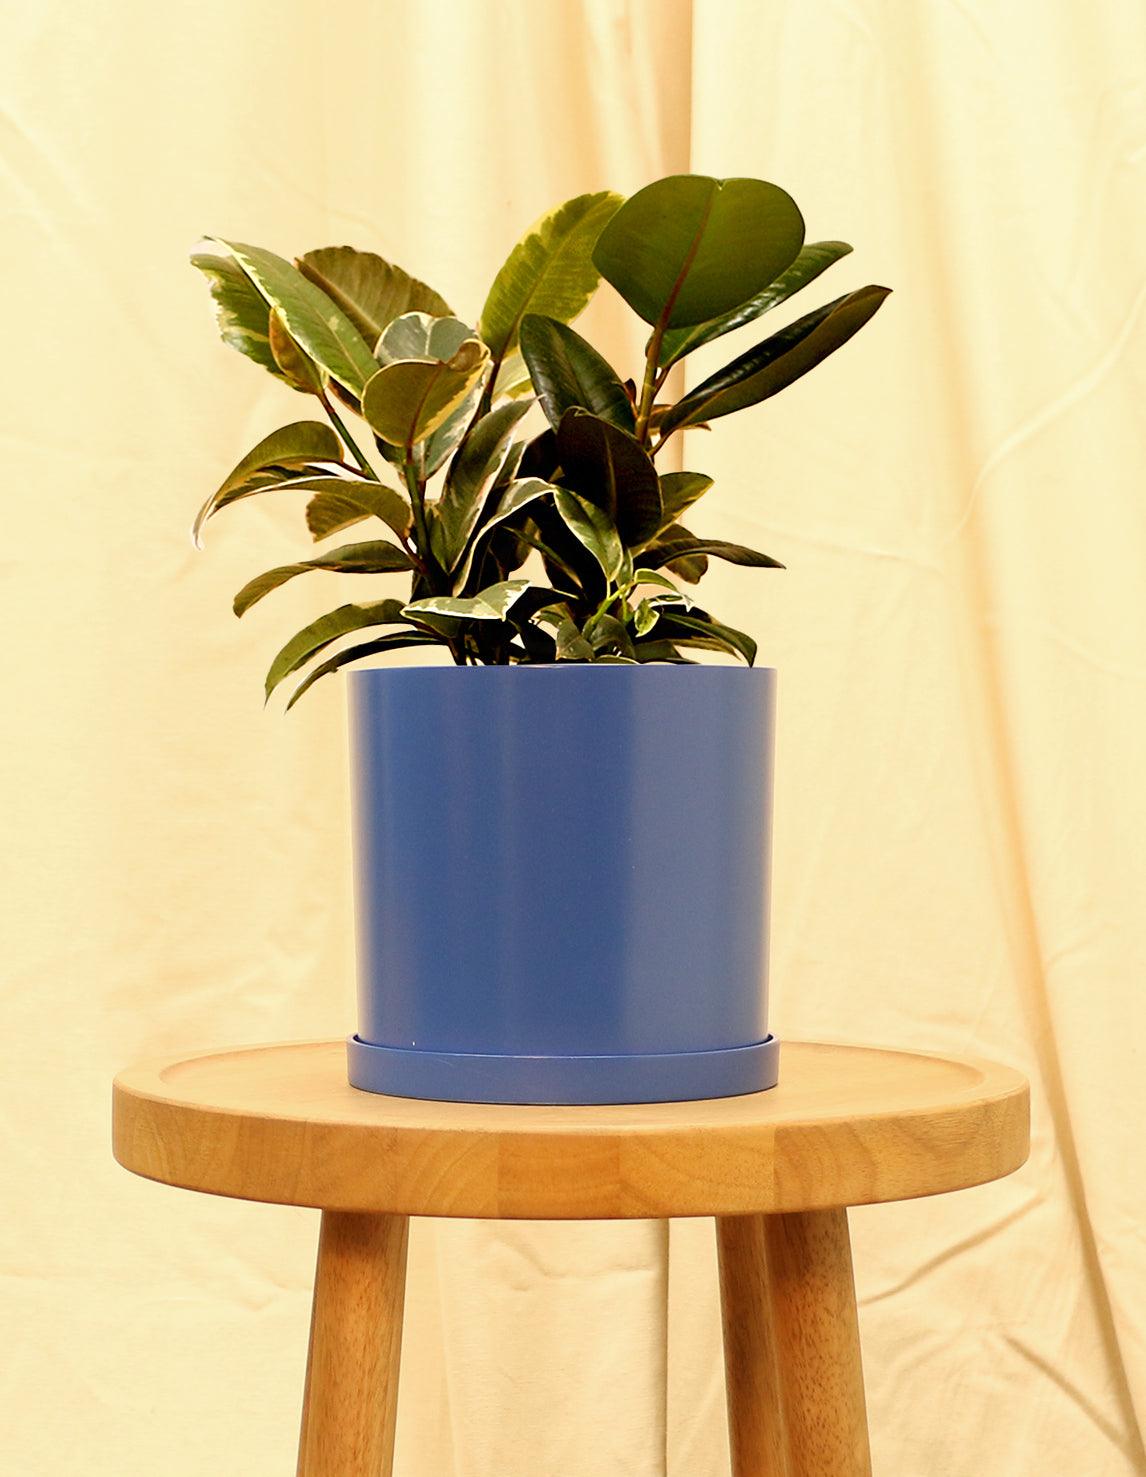 Medium Variegated Rubber Fig Plant in blue pot.